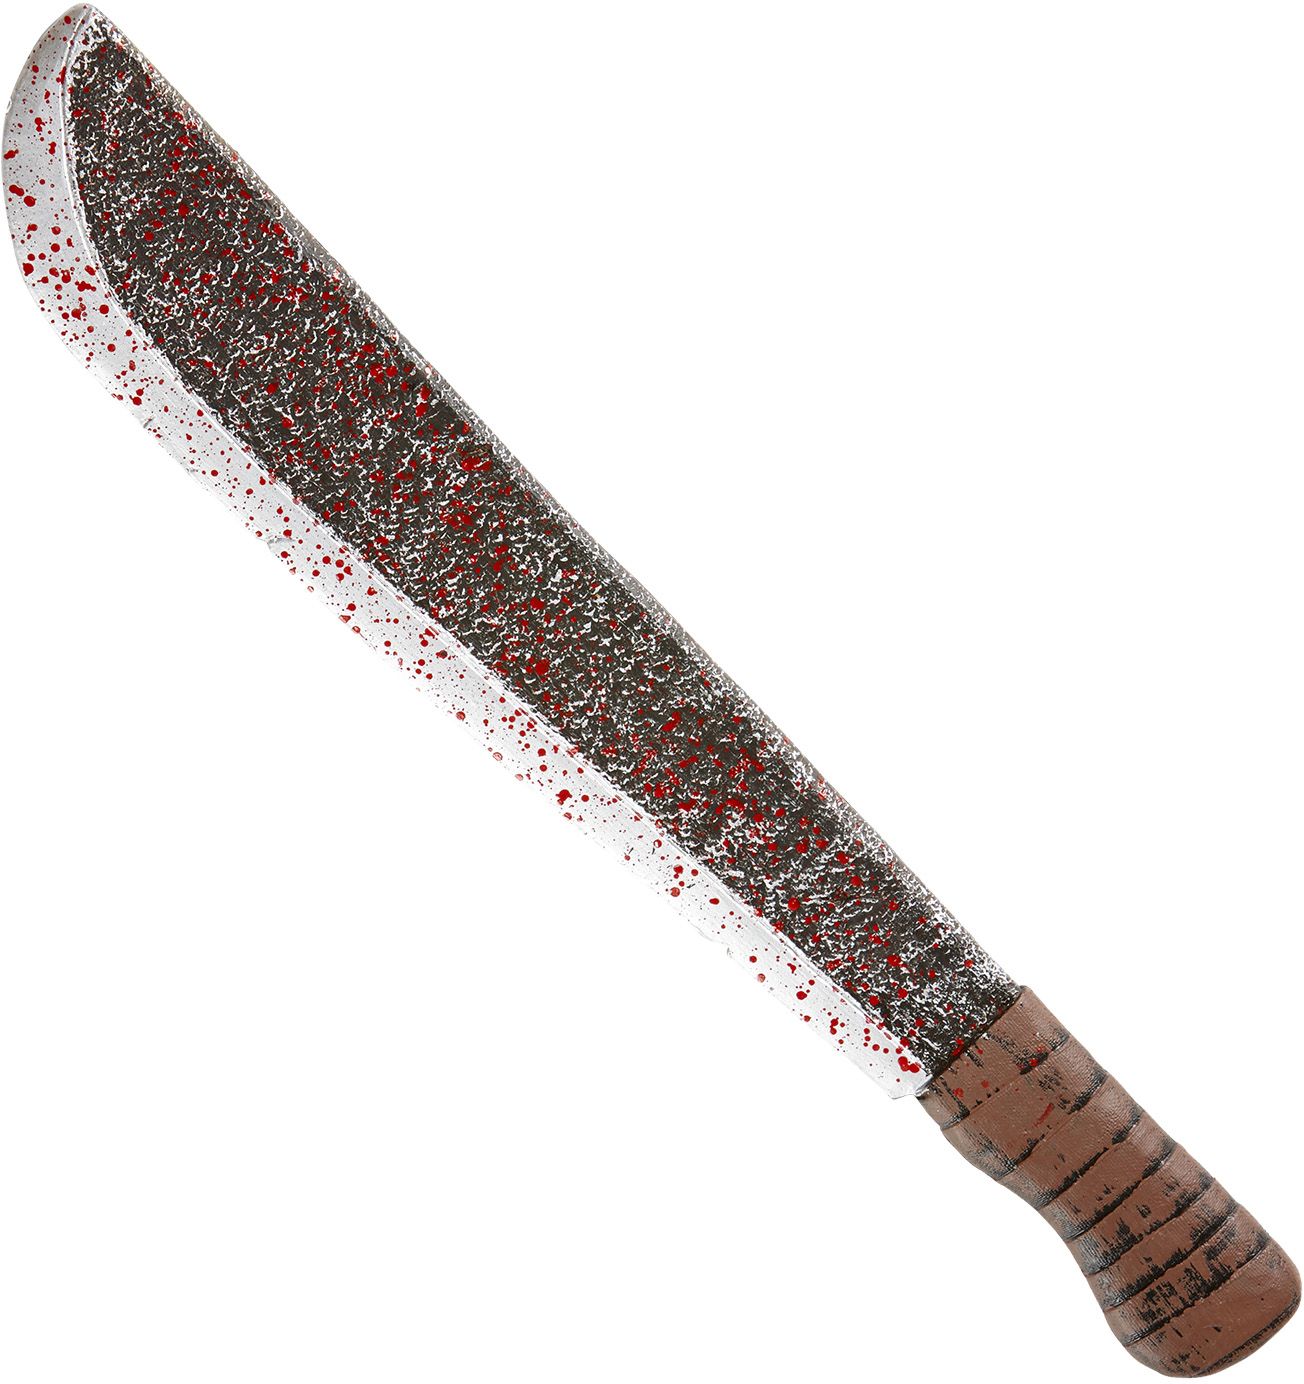 Bloederige Halloween machete 56cm